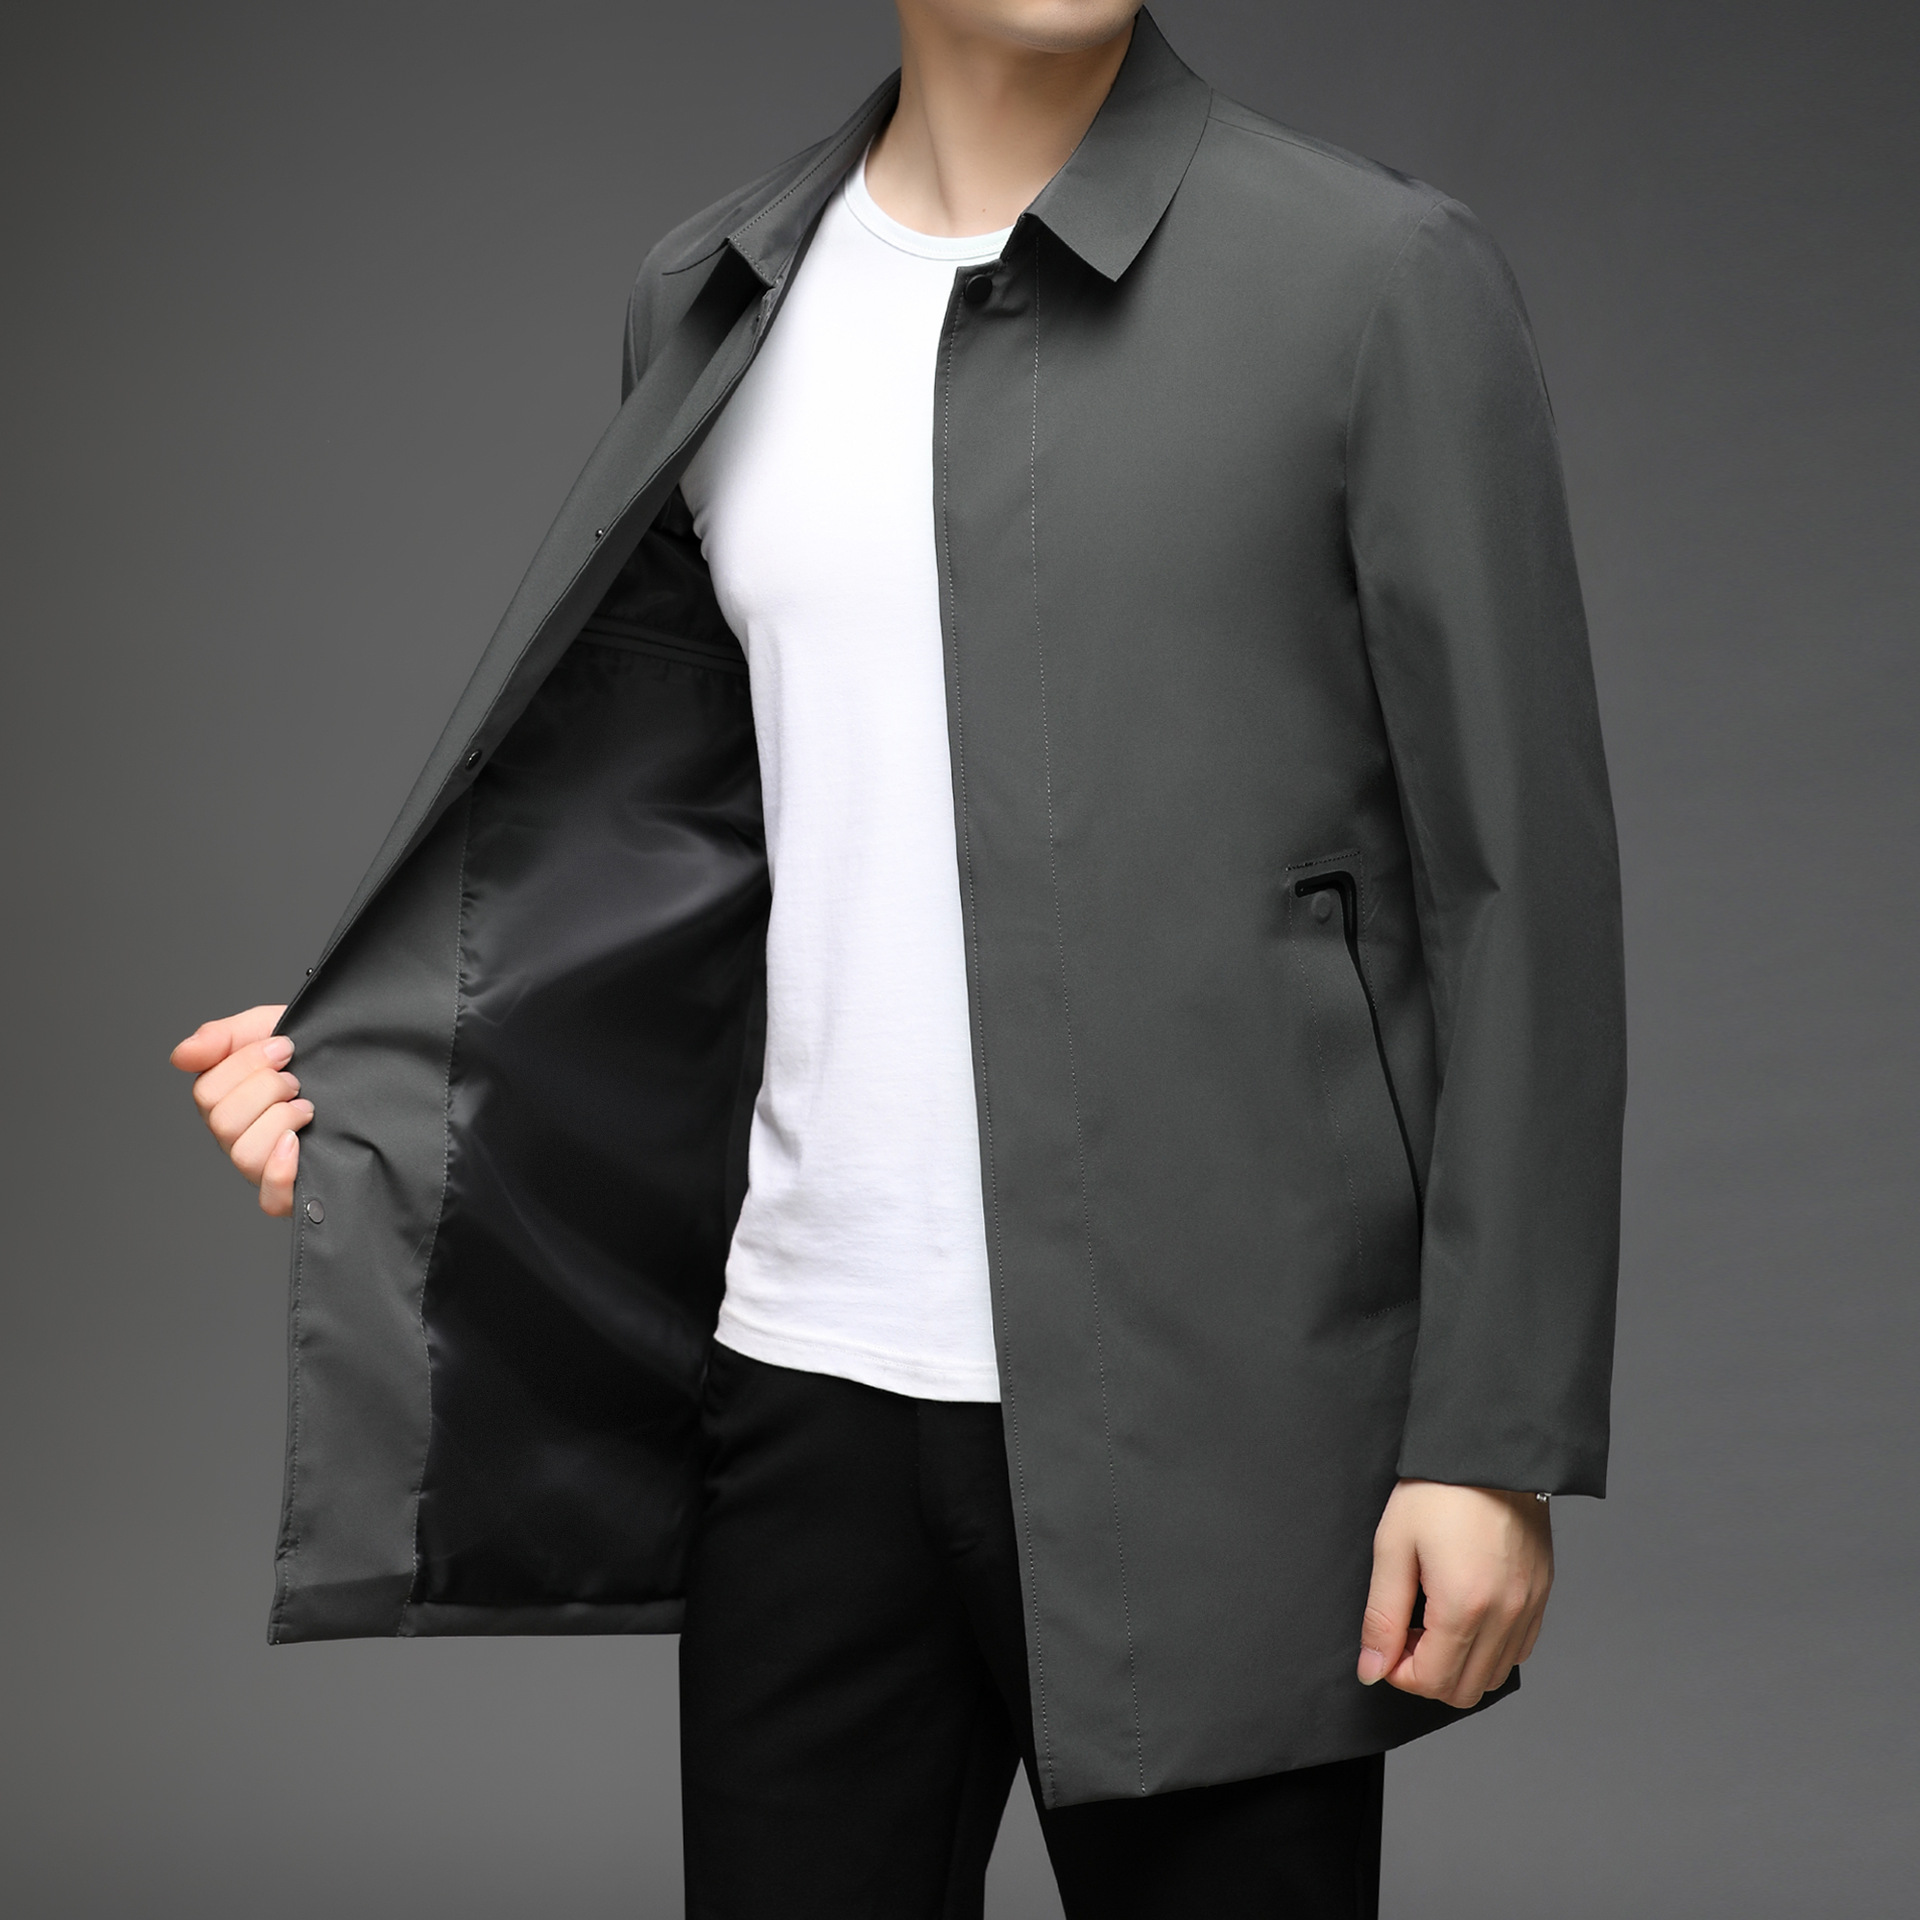 Light luxury men's suit jacket casual new year suit men's trend slim jacket thin TT-KB8072